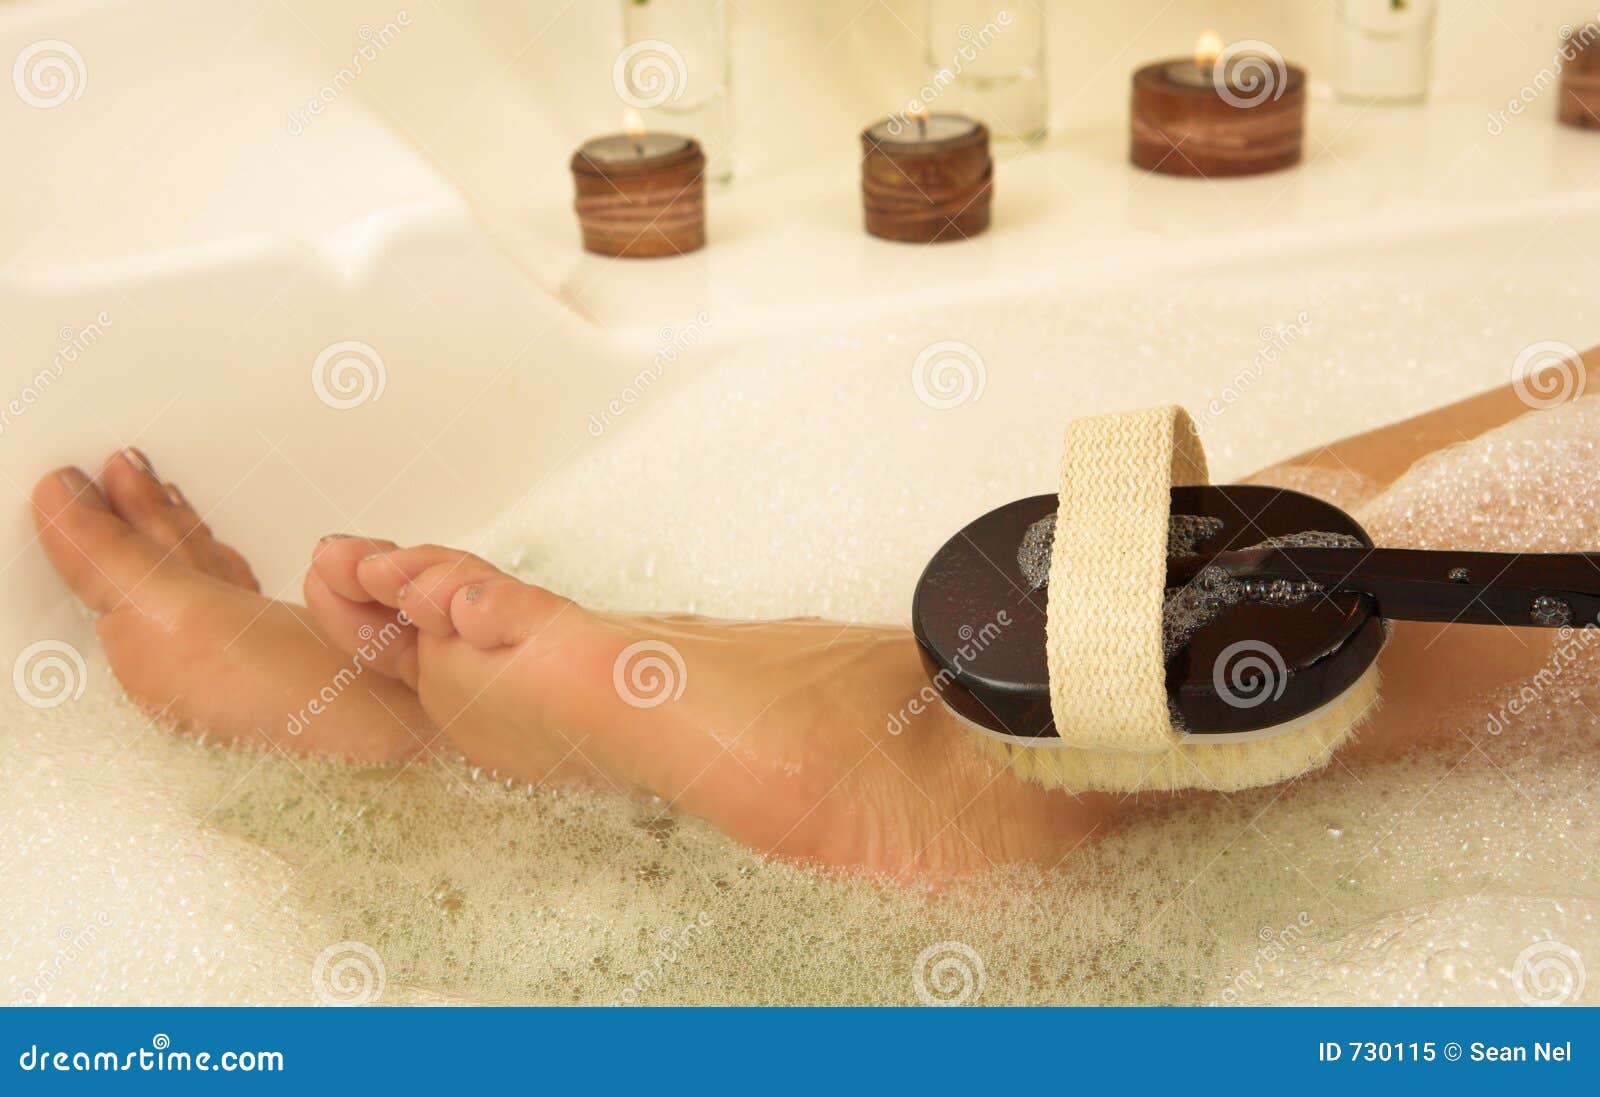 321 Woman Foot Bubble Bath Stock Photos - Free & Royalty-Free